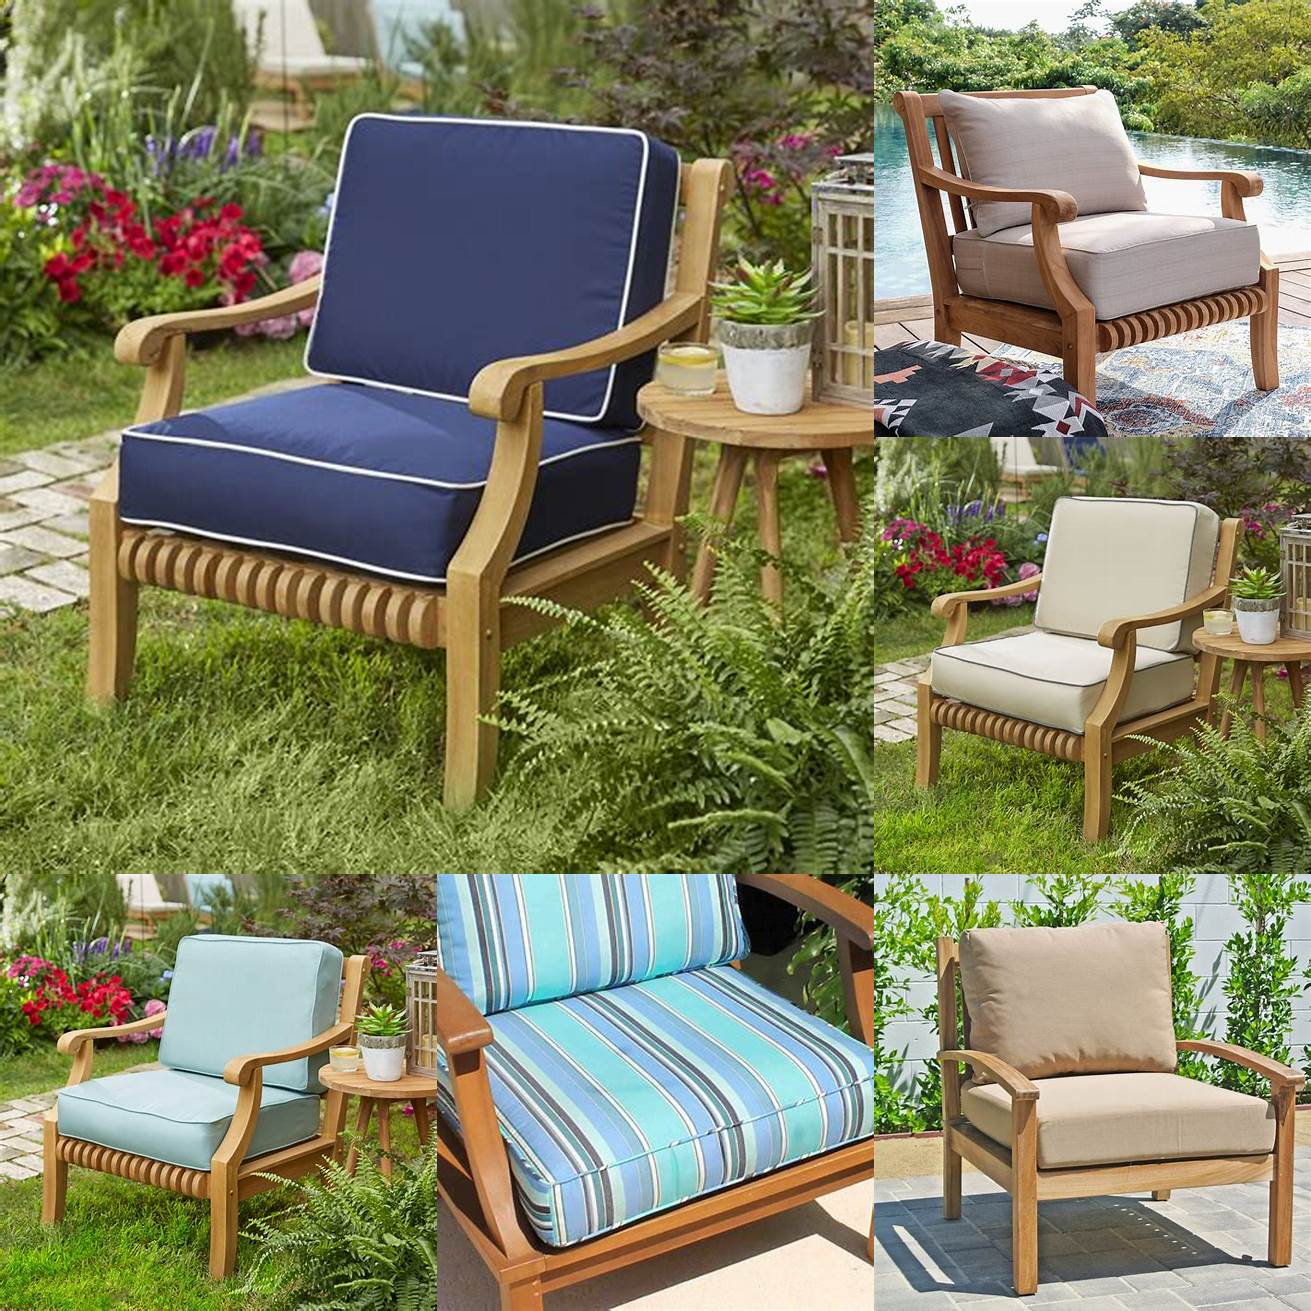 Madera Teak Sunbrella Outdoor Furniture Cushions on a Chair